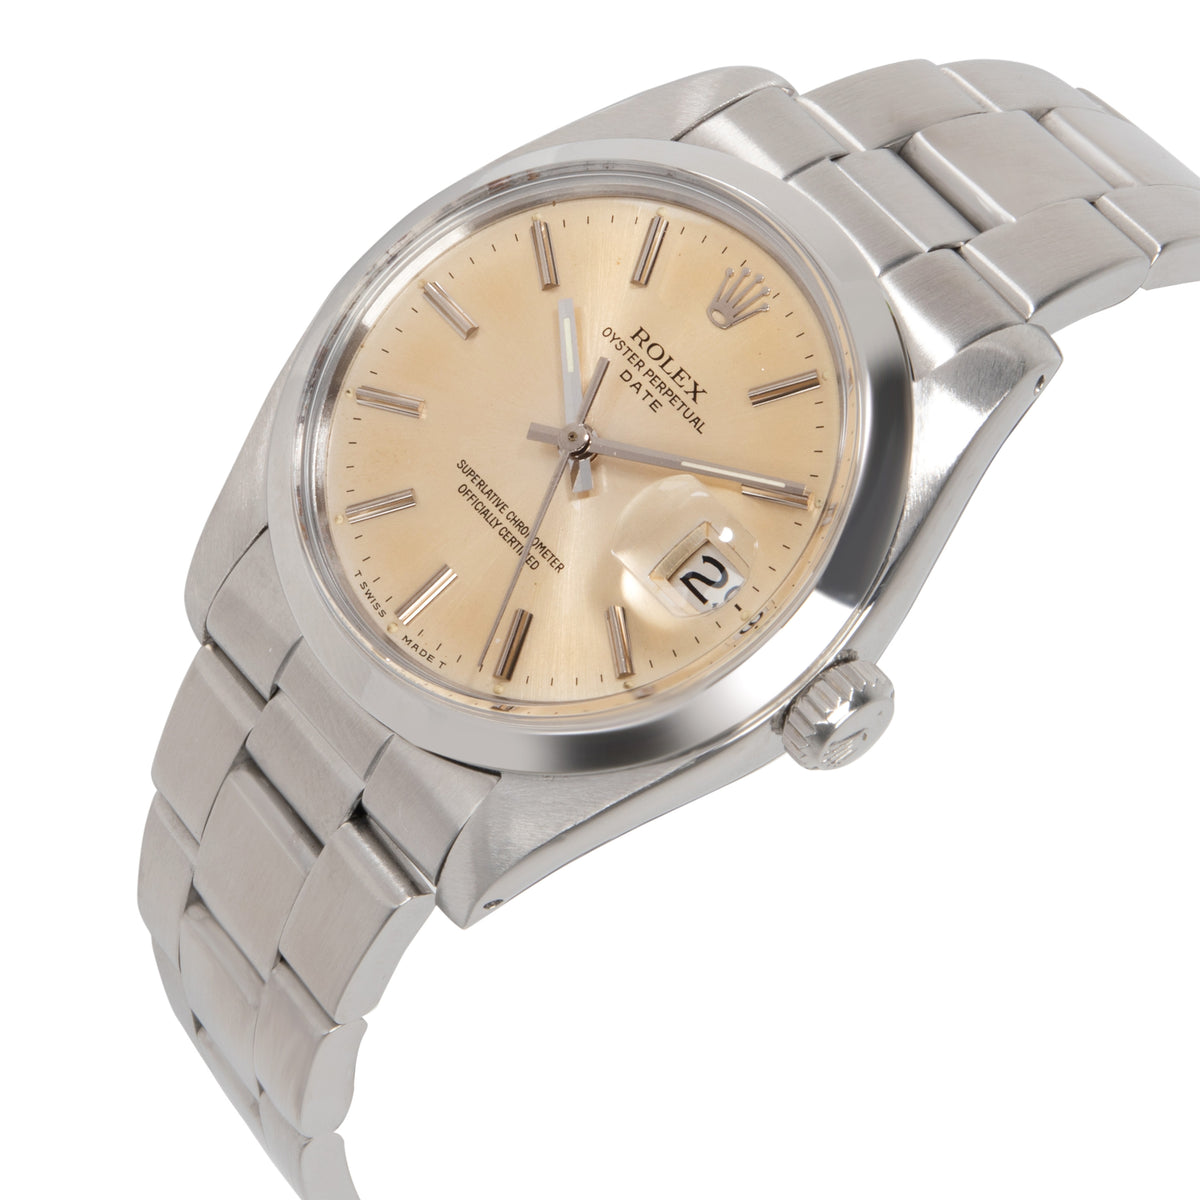 Rolex Date 1500 Men's Watch in  Stainless Steel